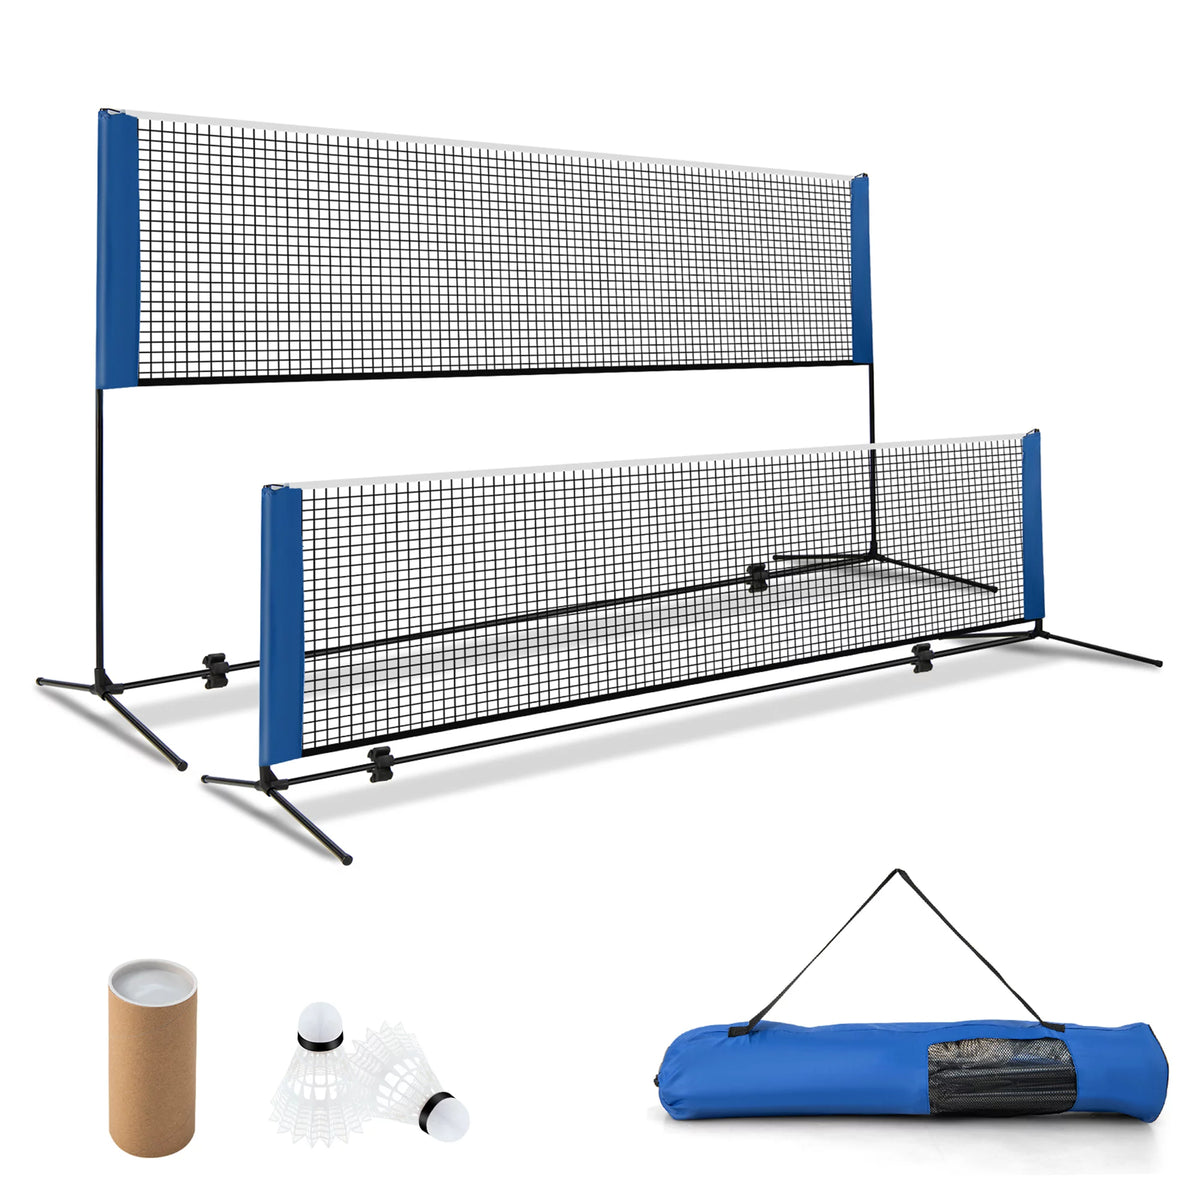 10FT Adjustable Badminton Net Set with Carry Bag - Portable & Easy Setup